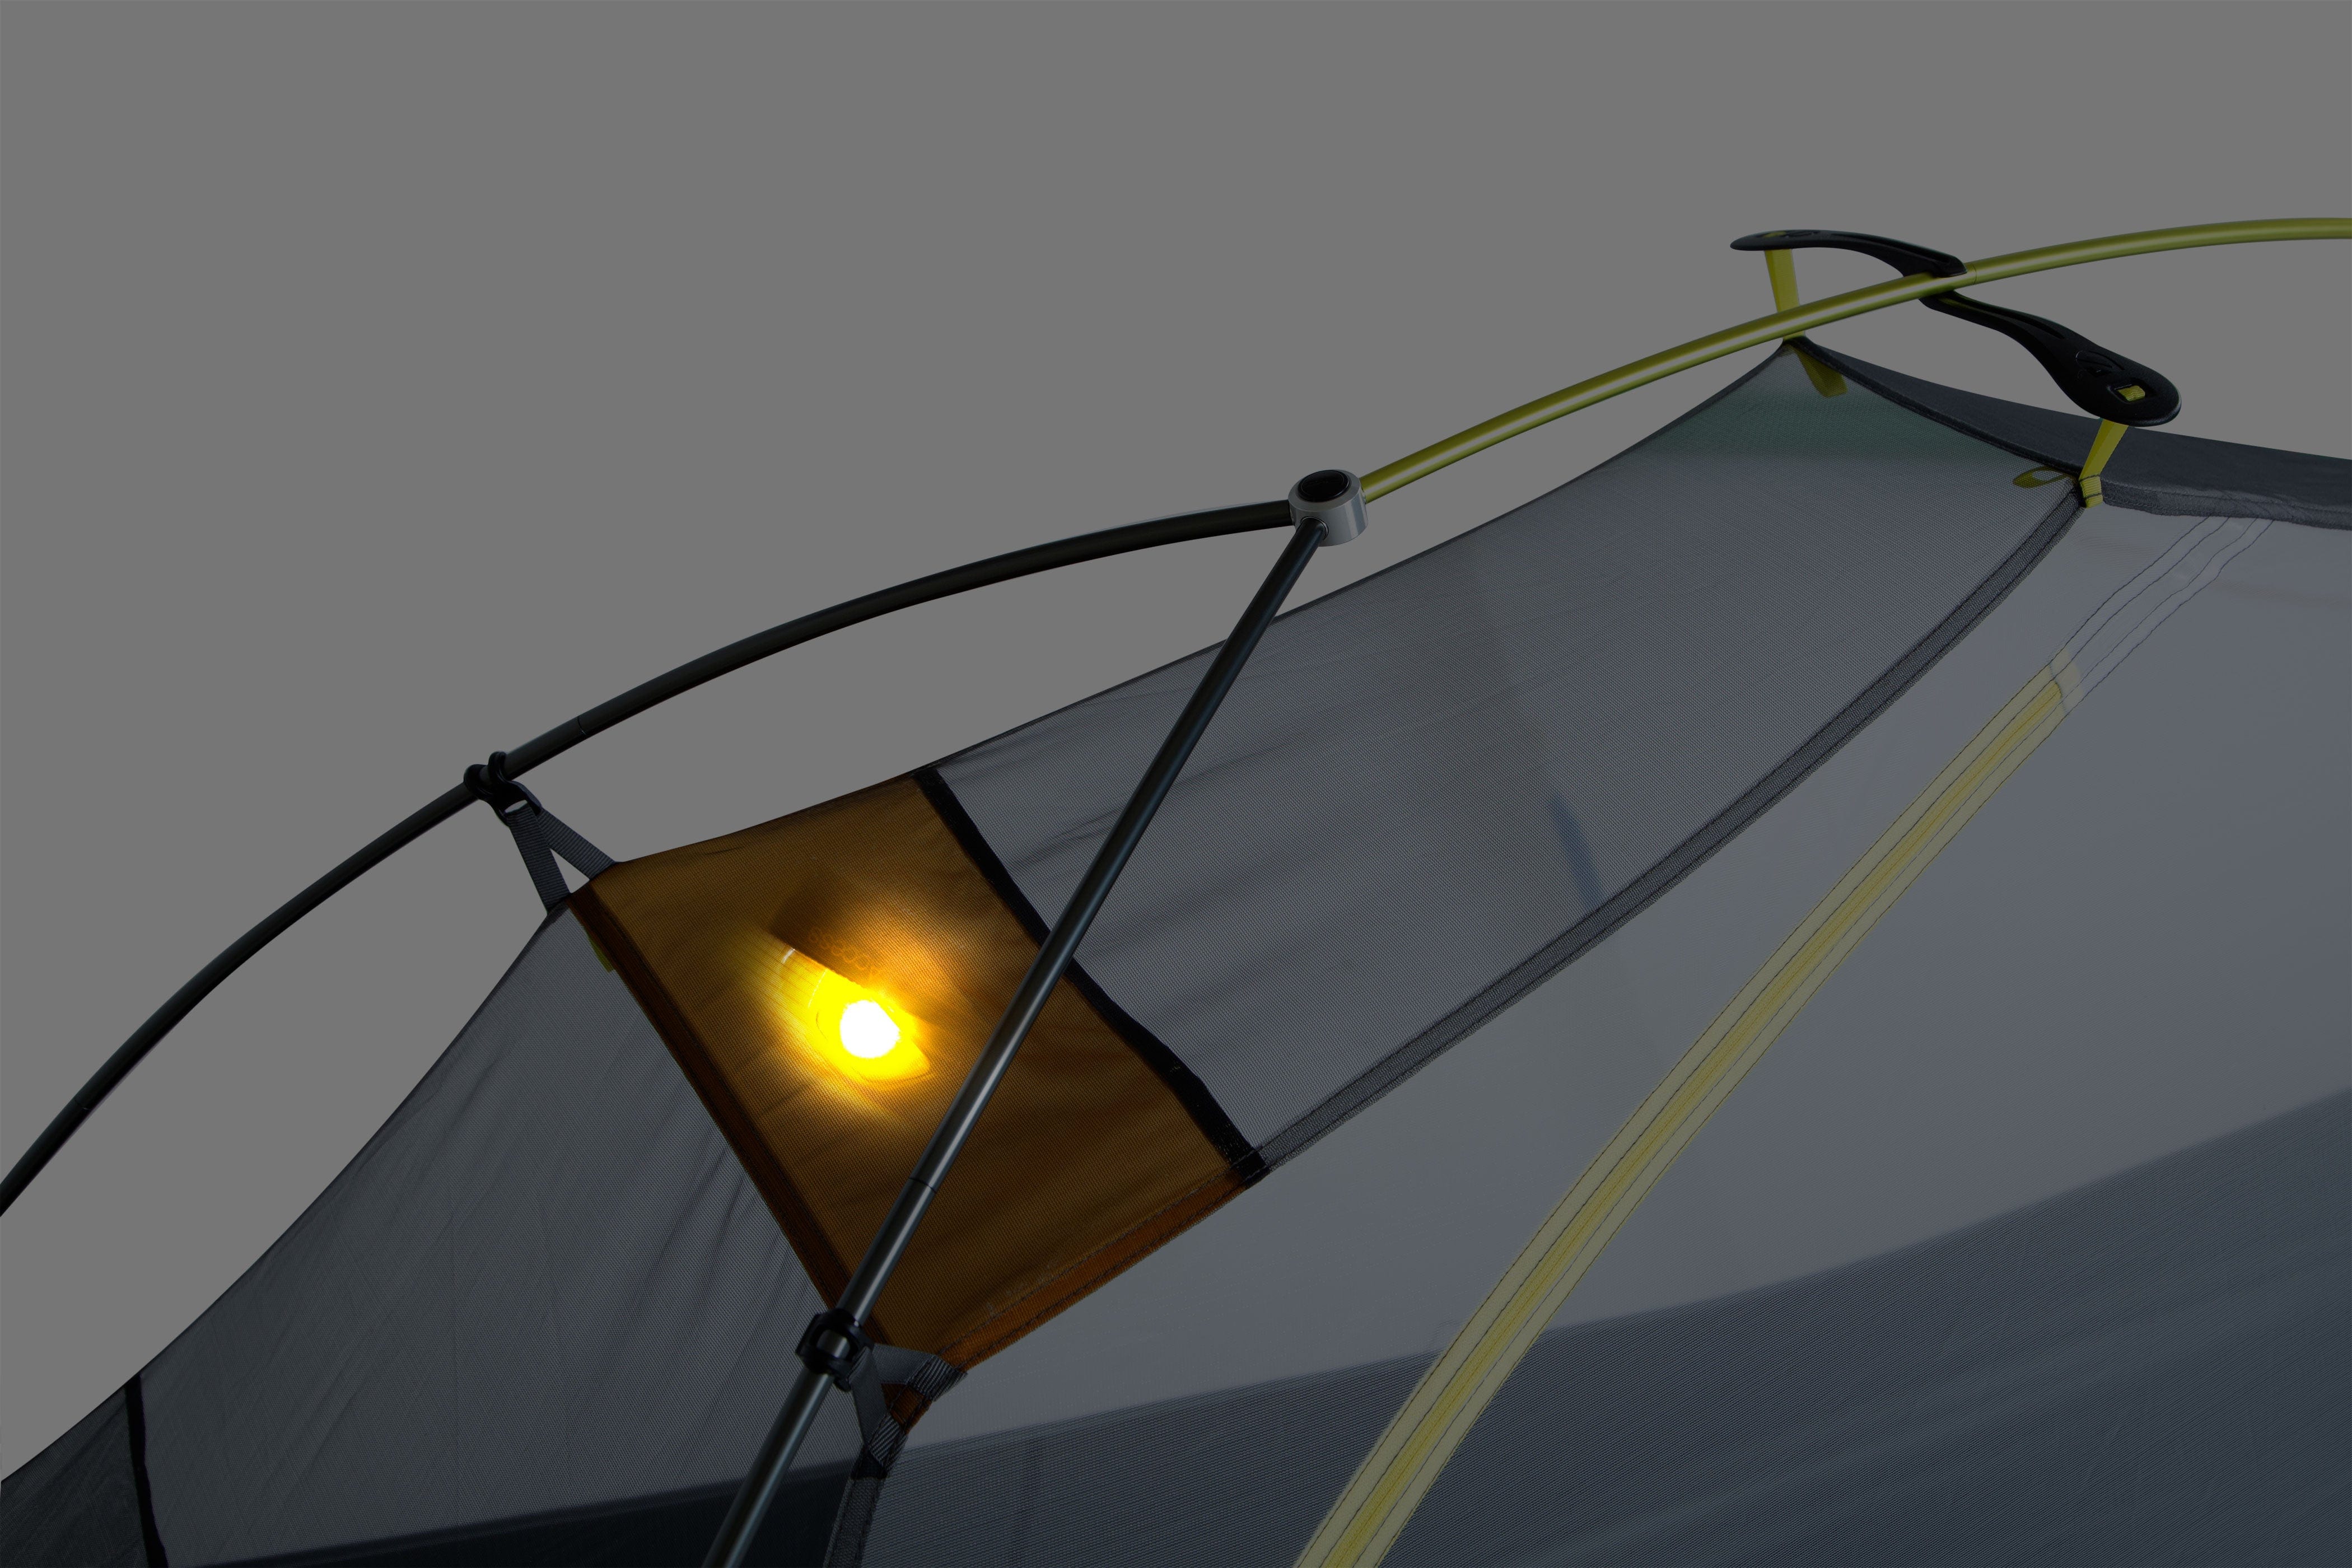 Nemo Tent Hornet OSMO Ultralight Backpacking Tent (Updated)